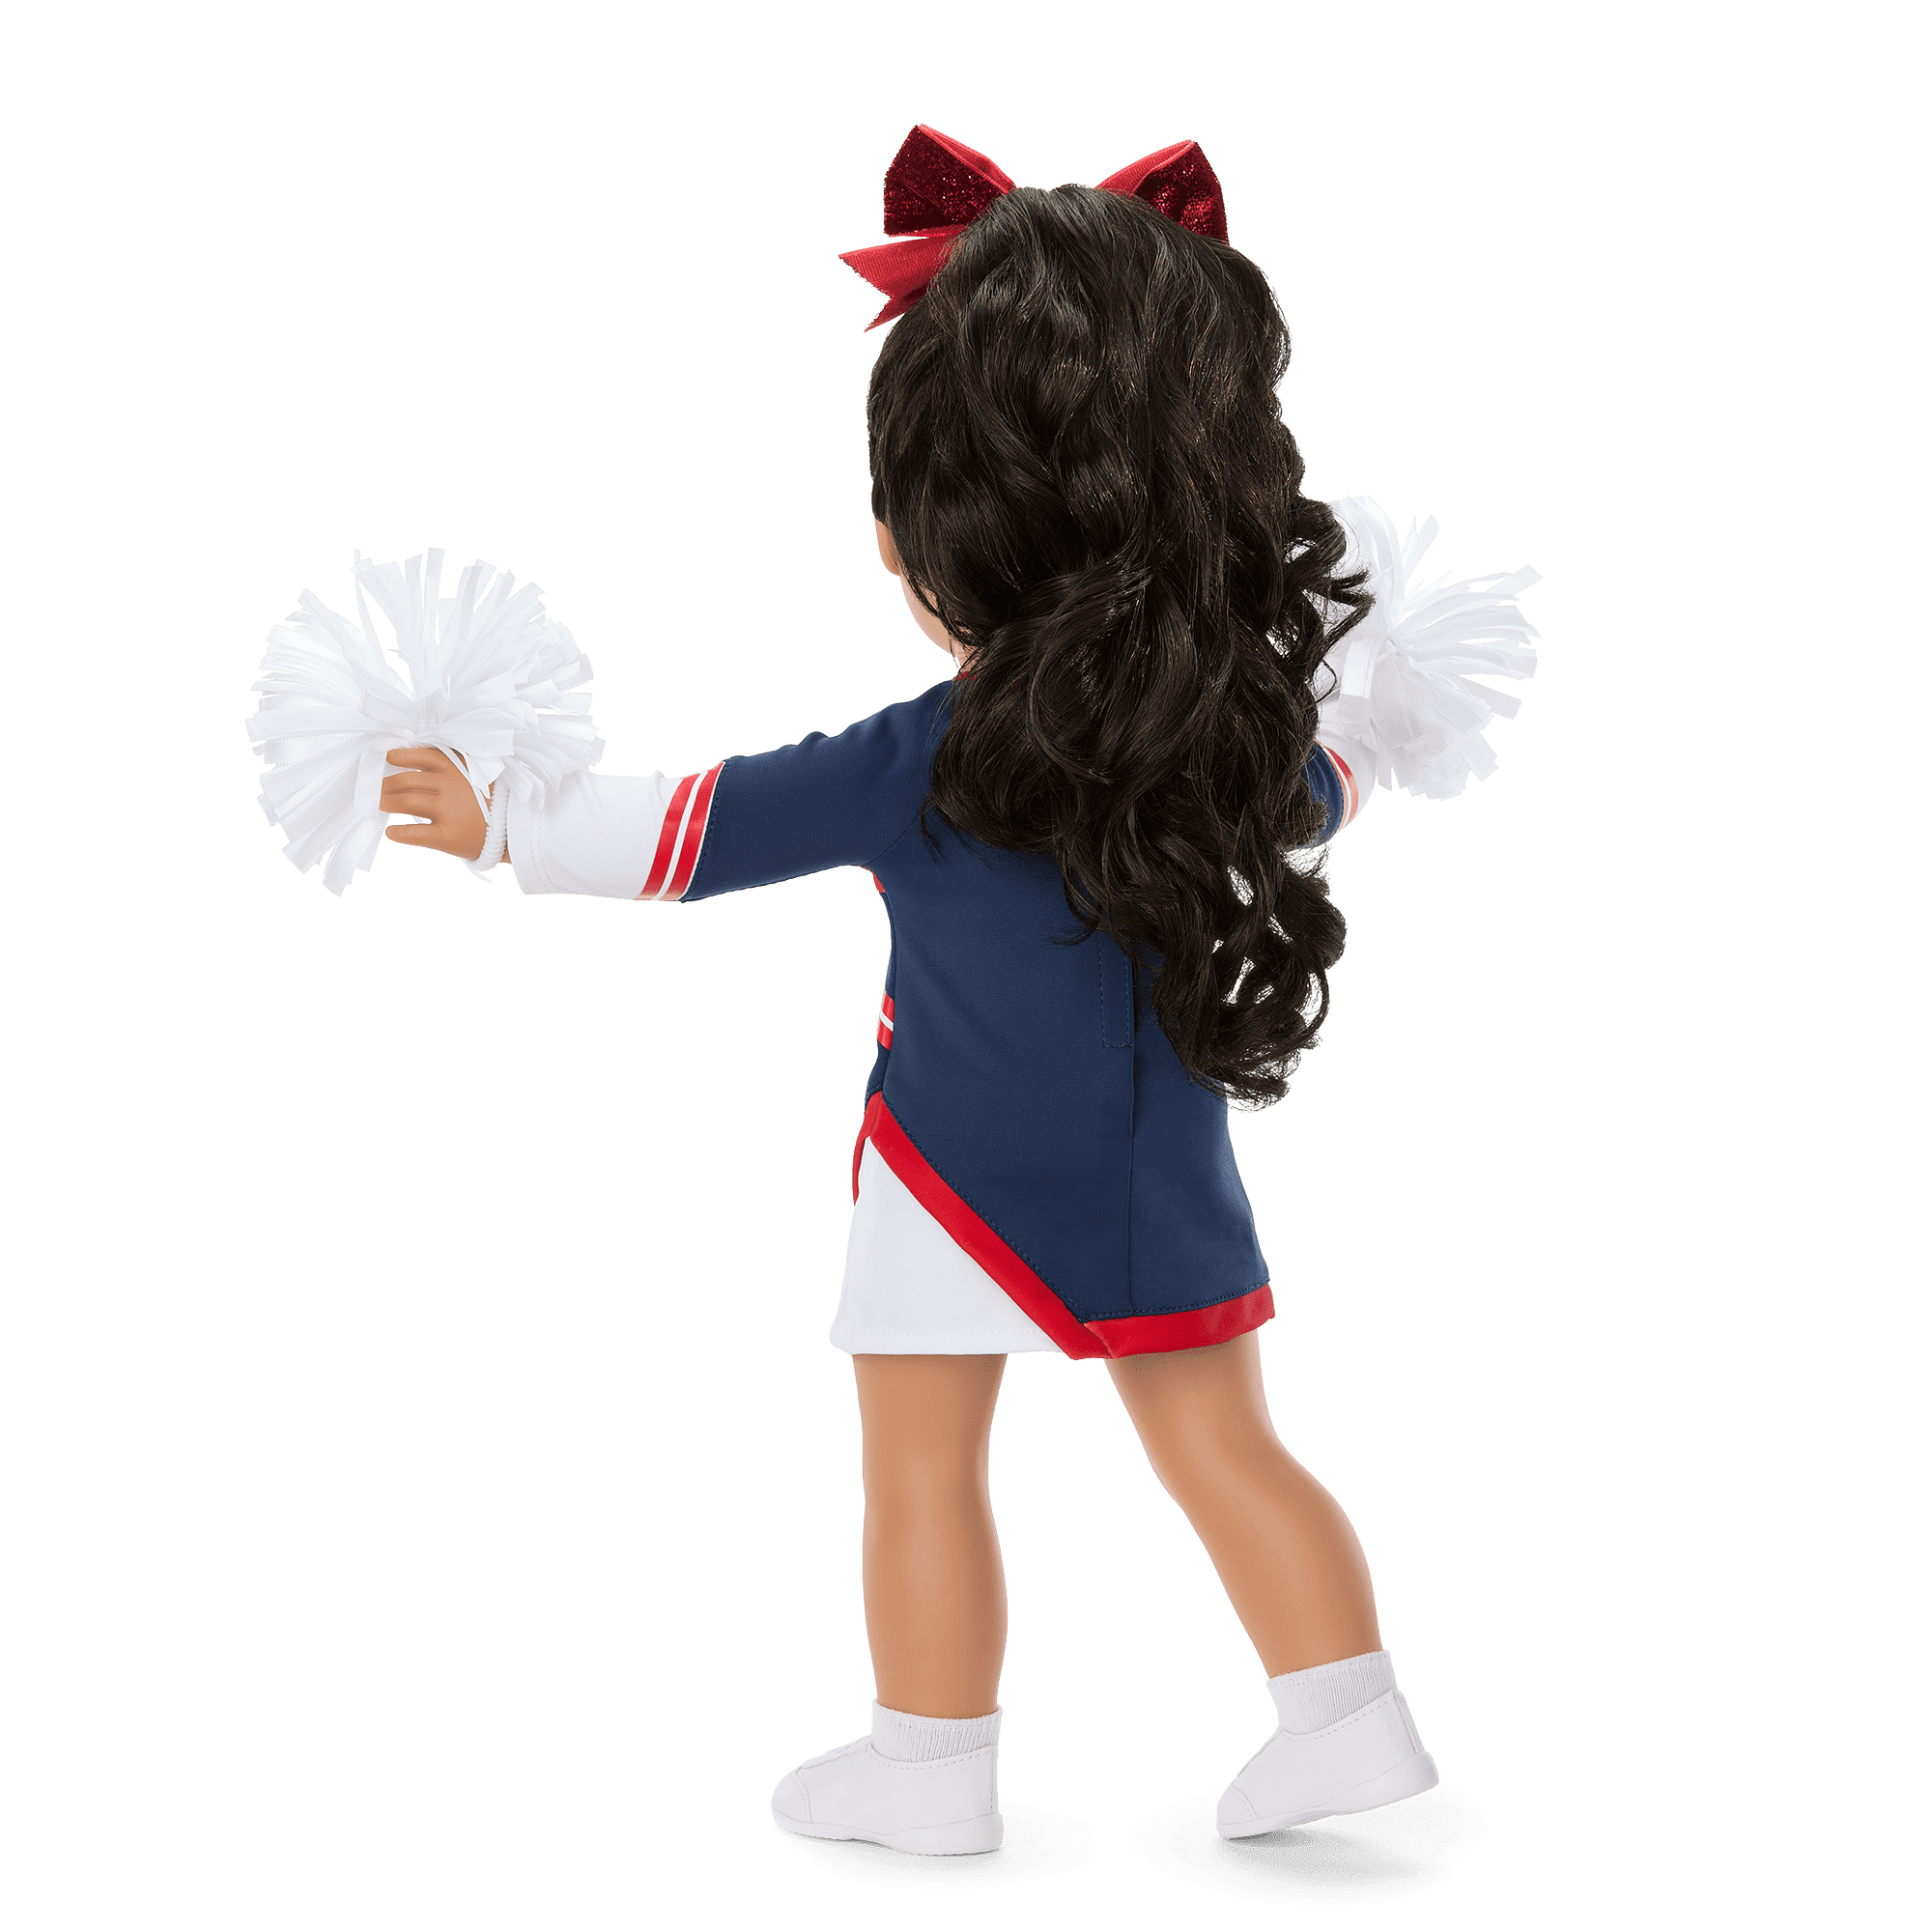 American Girl® x NFL New England Patriots Cheer Uniform for 18-inch Dolls